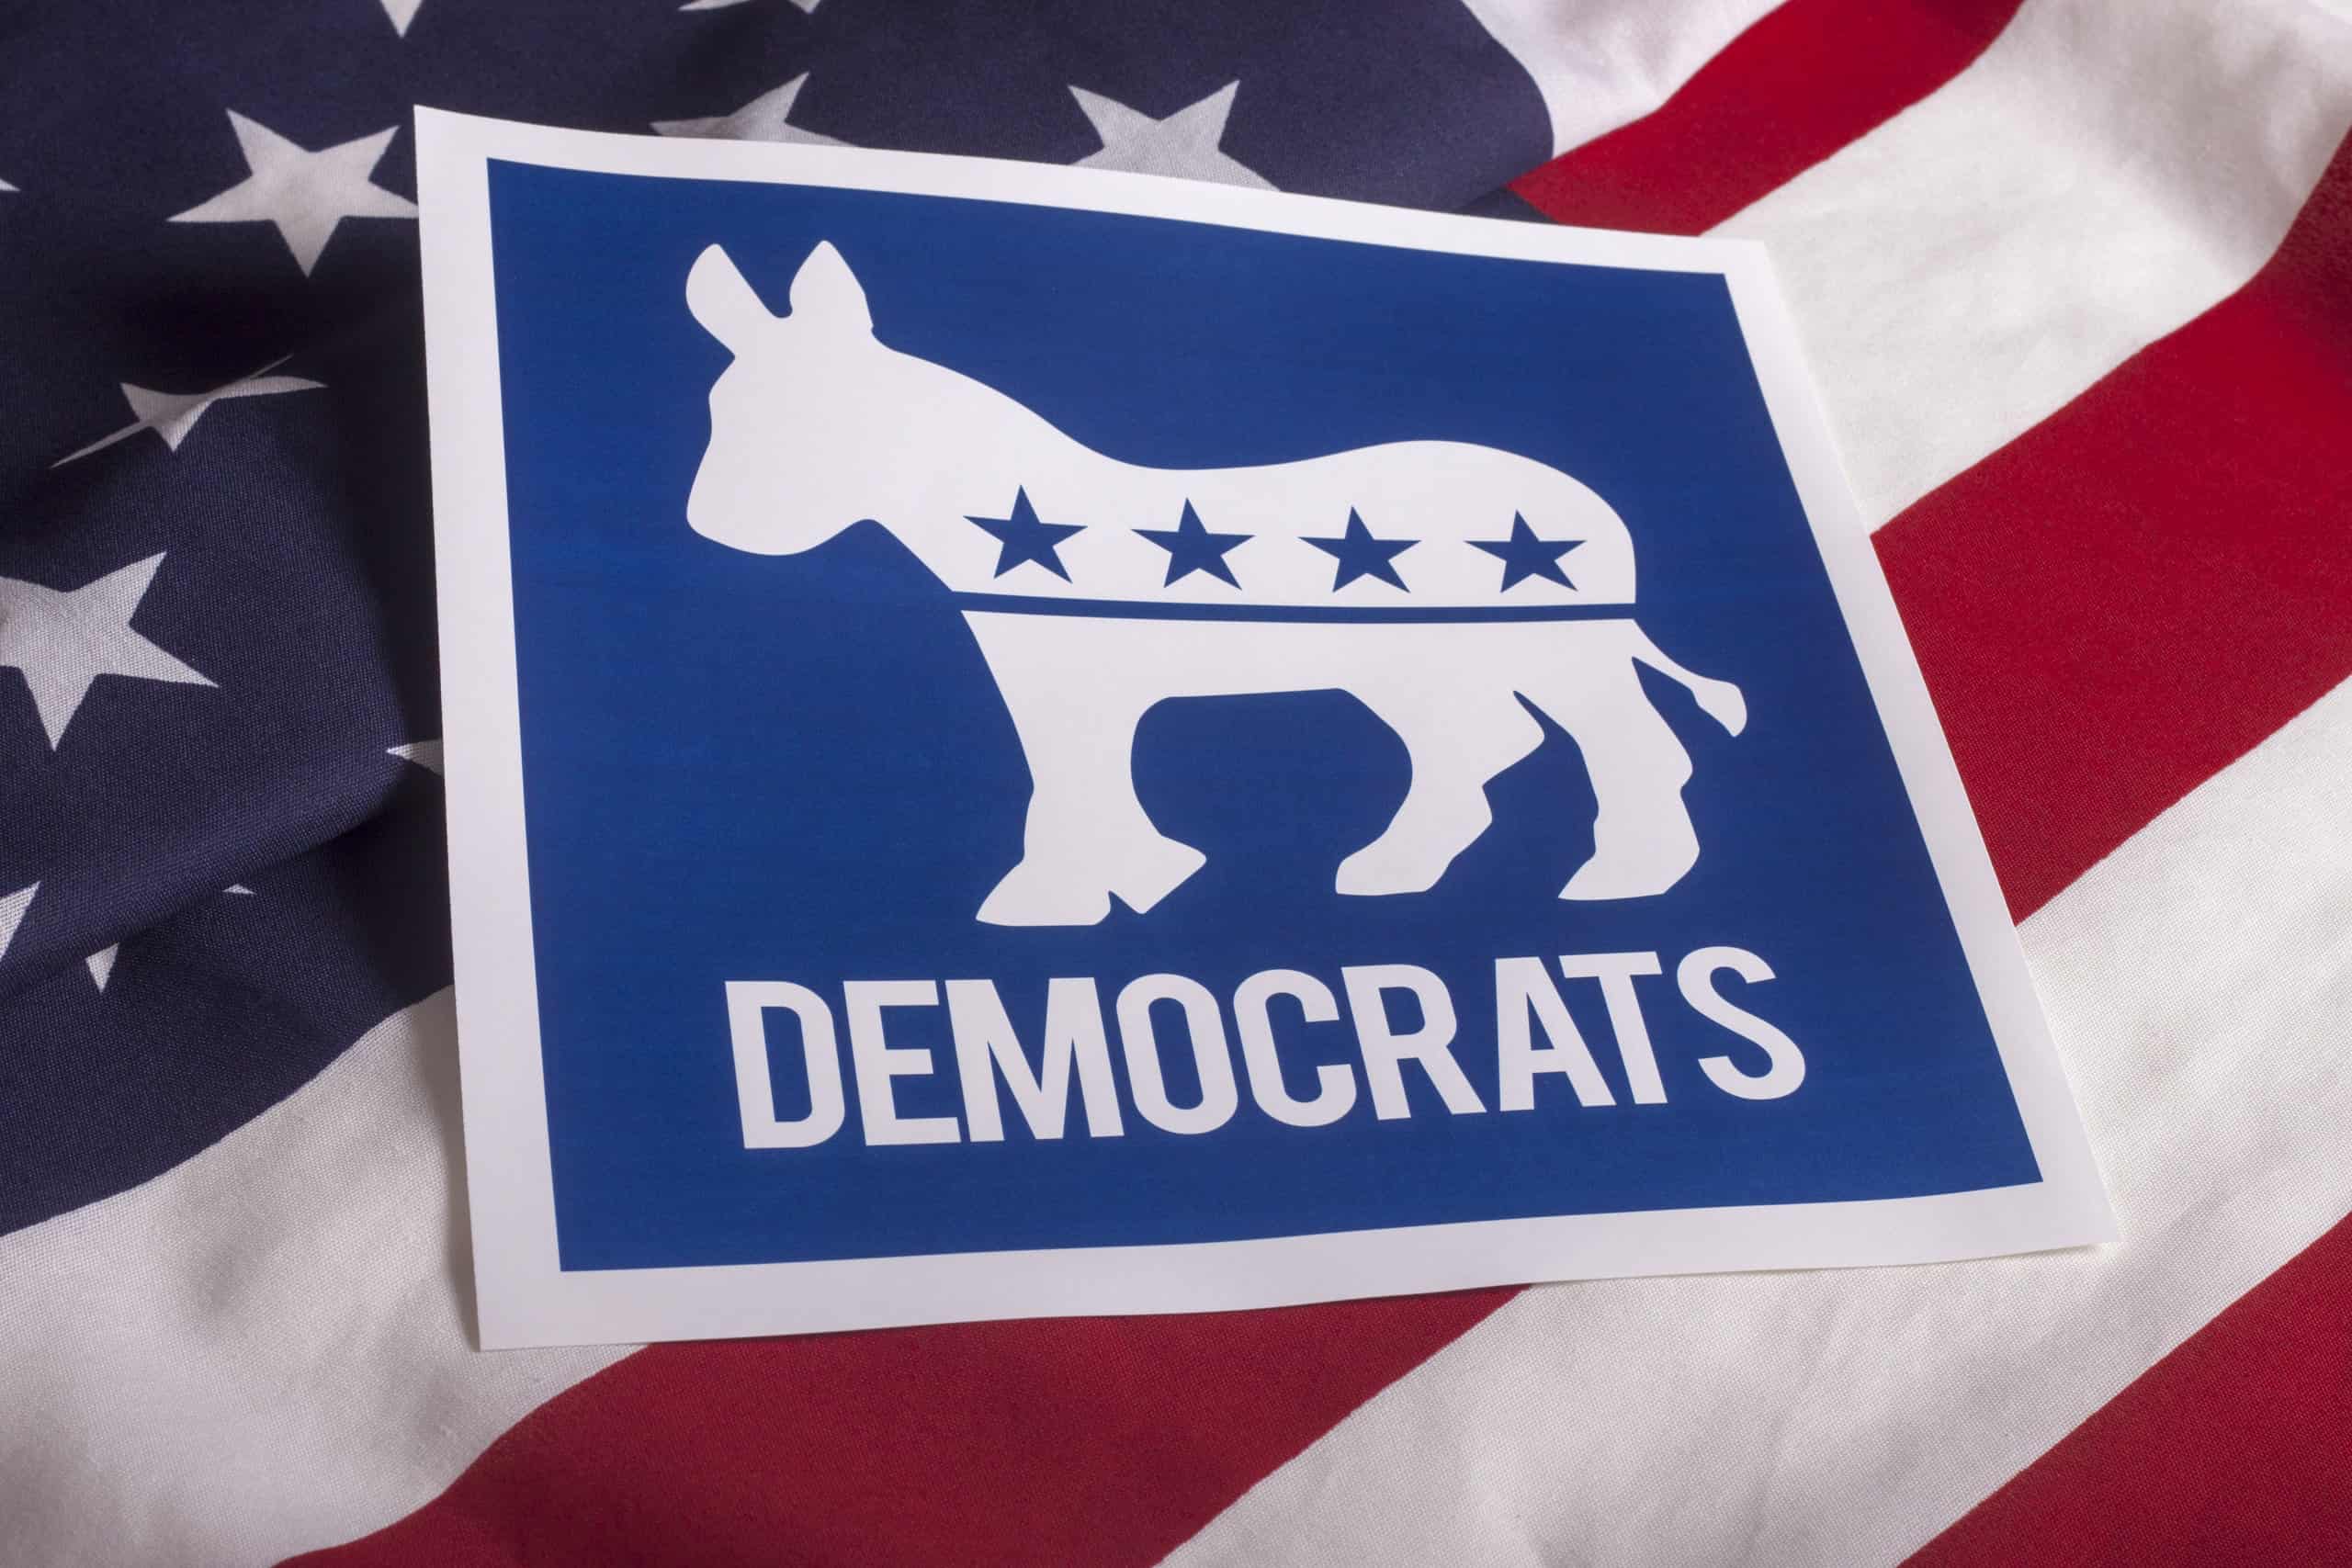 american political party symbols